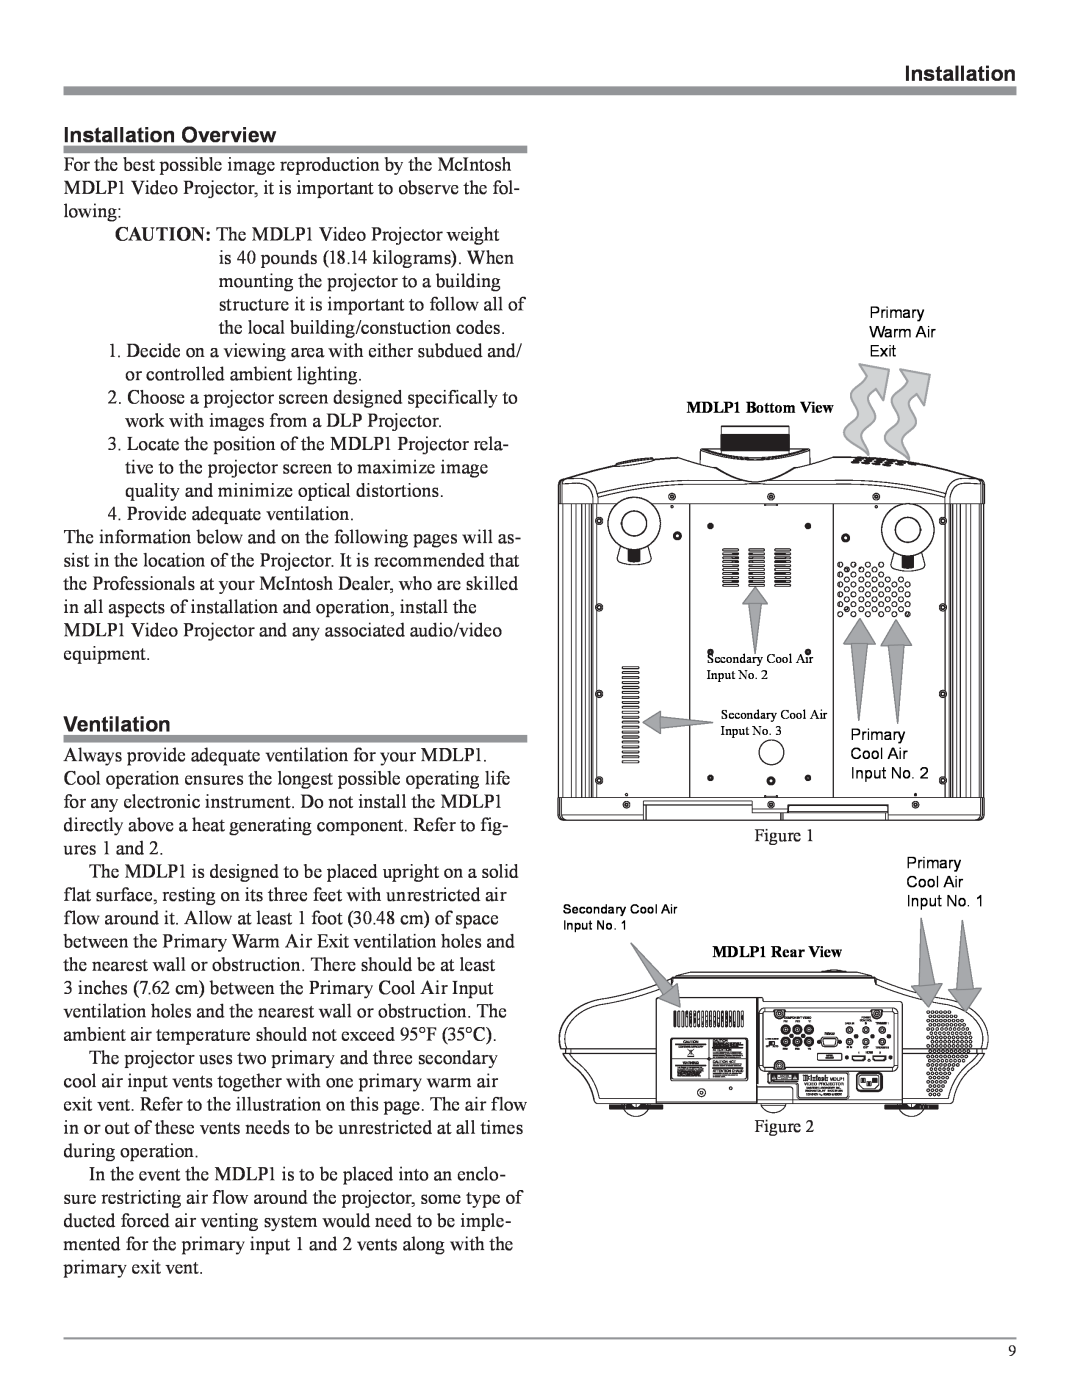 McIntosh MDLP1 owner manual Installation Overview, Ventilation 